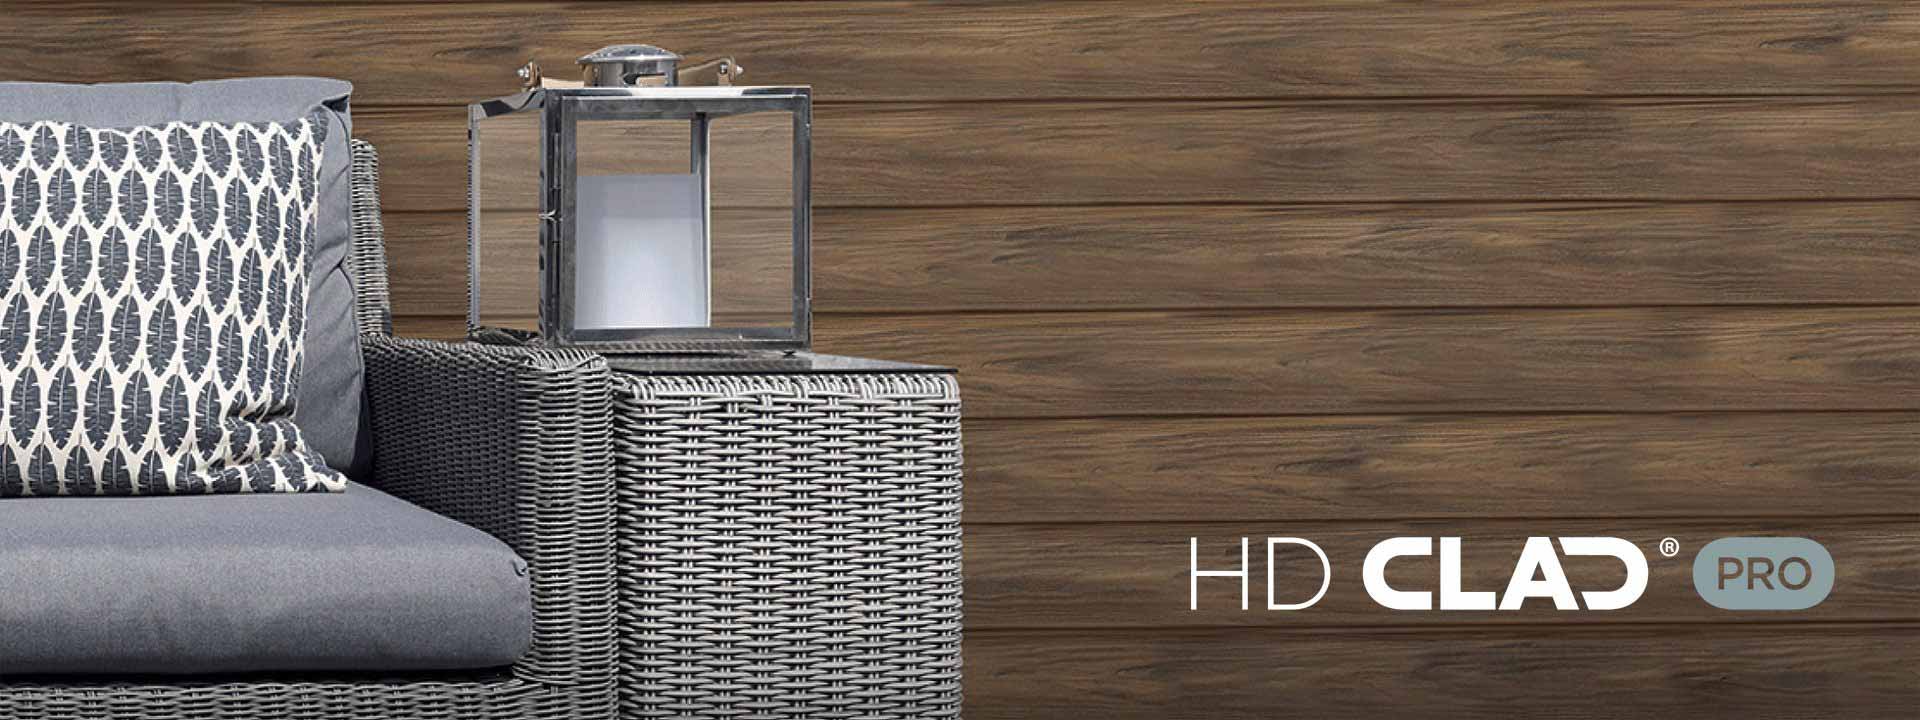 HD Clad Pro, a composite cladding system